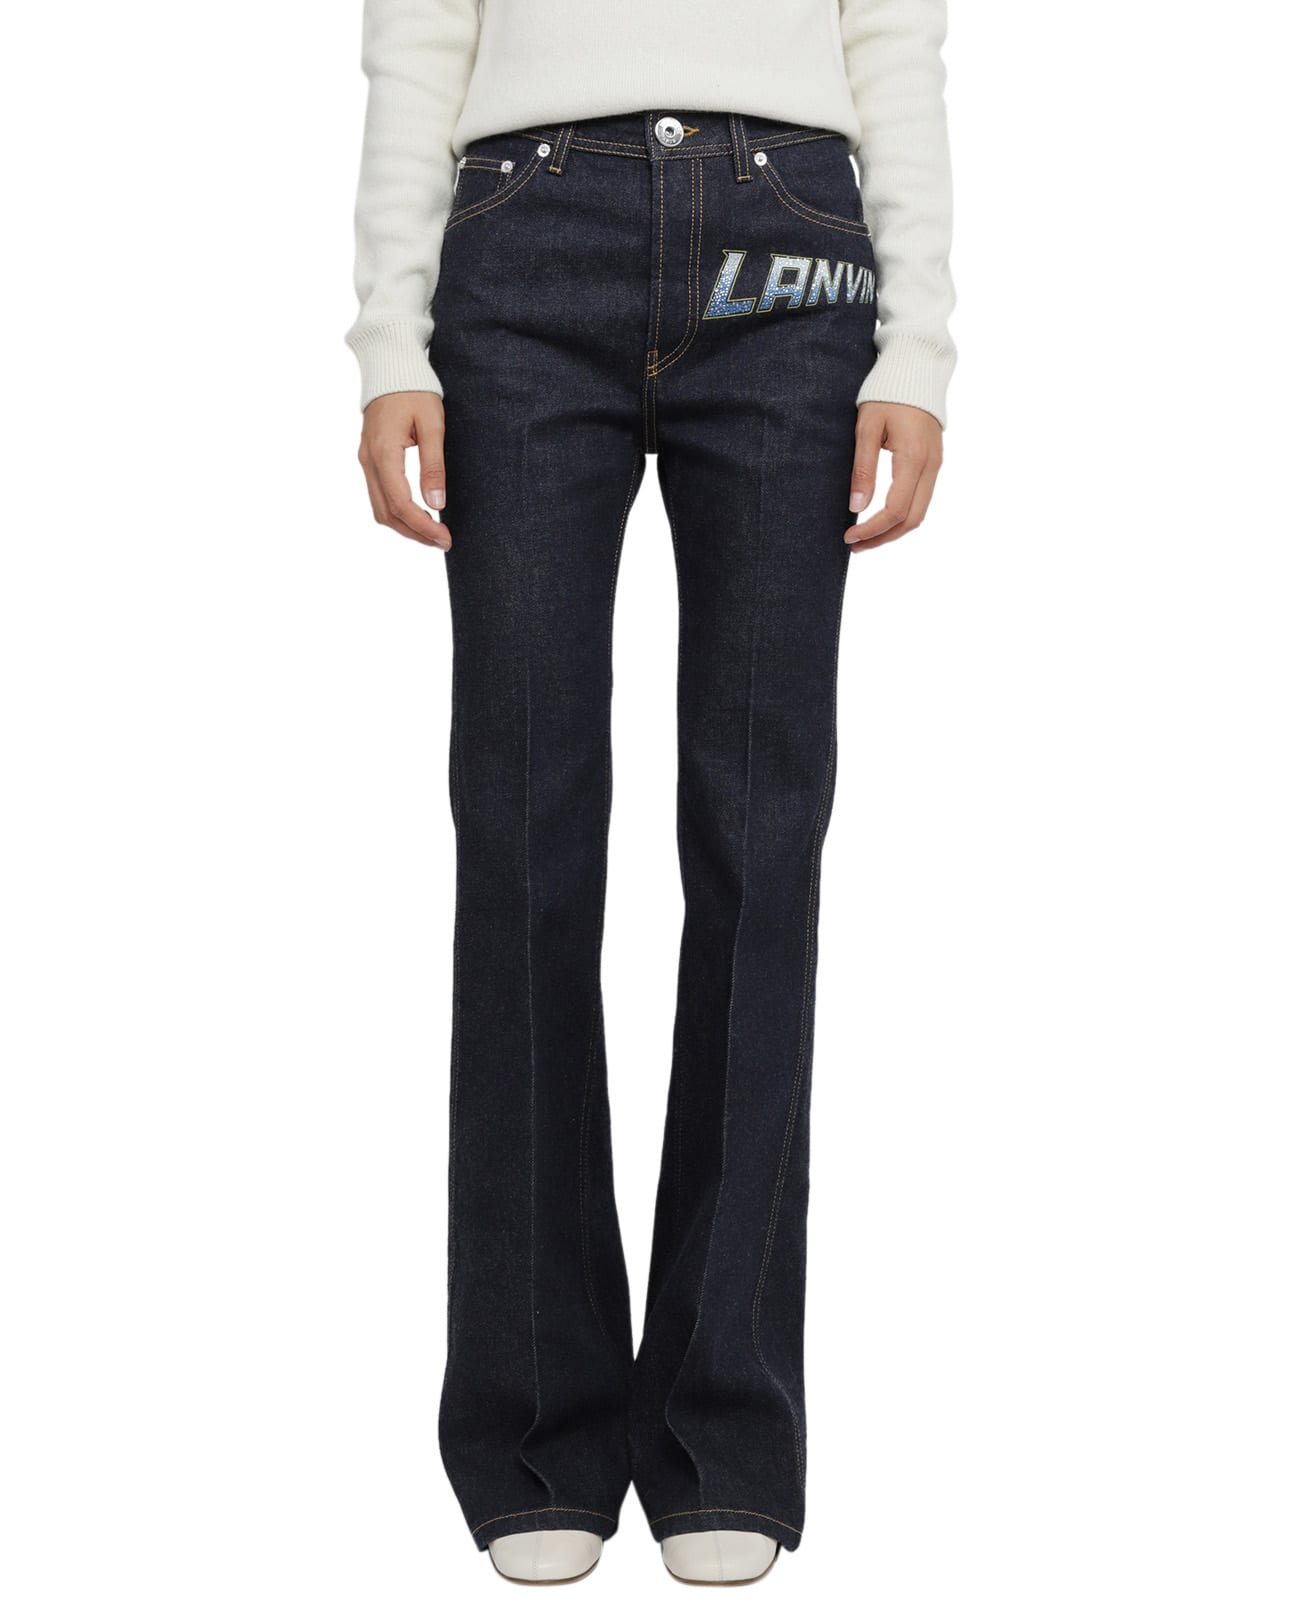 Lanvin Navy Jeans